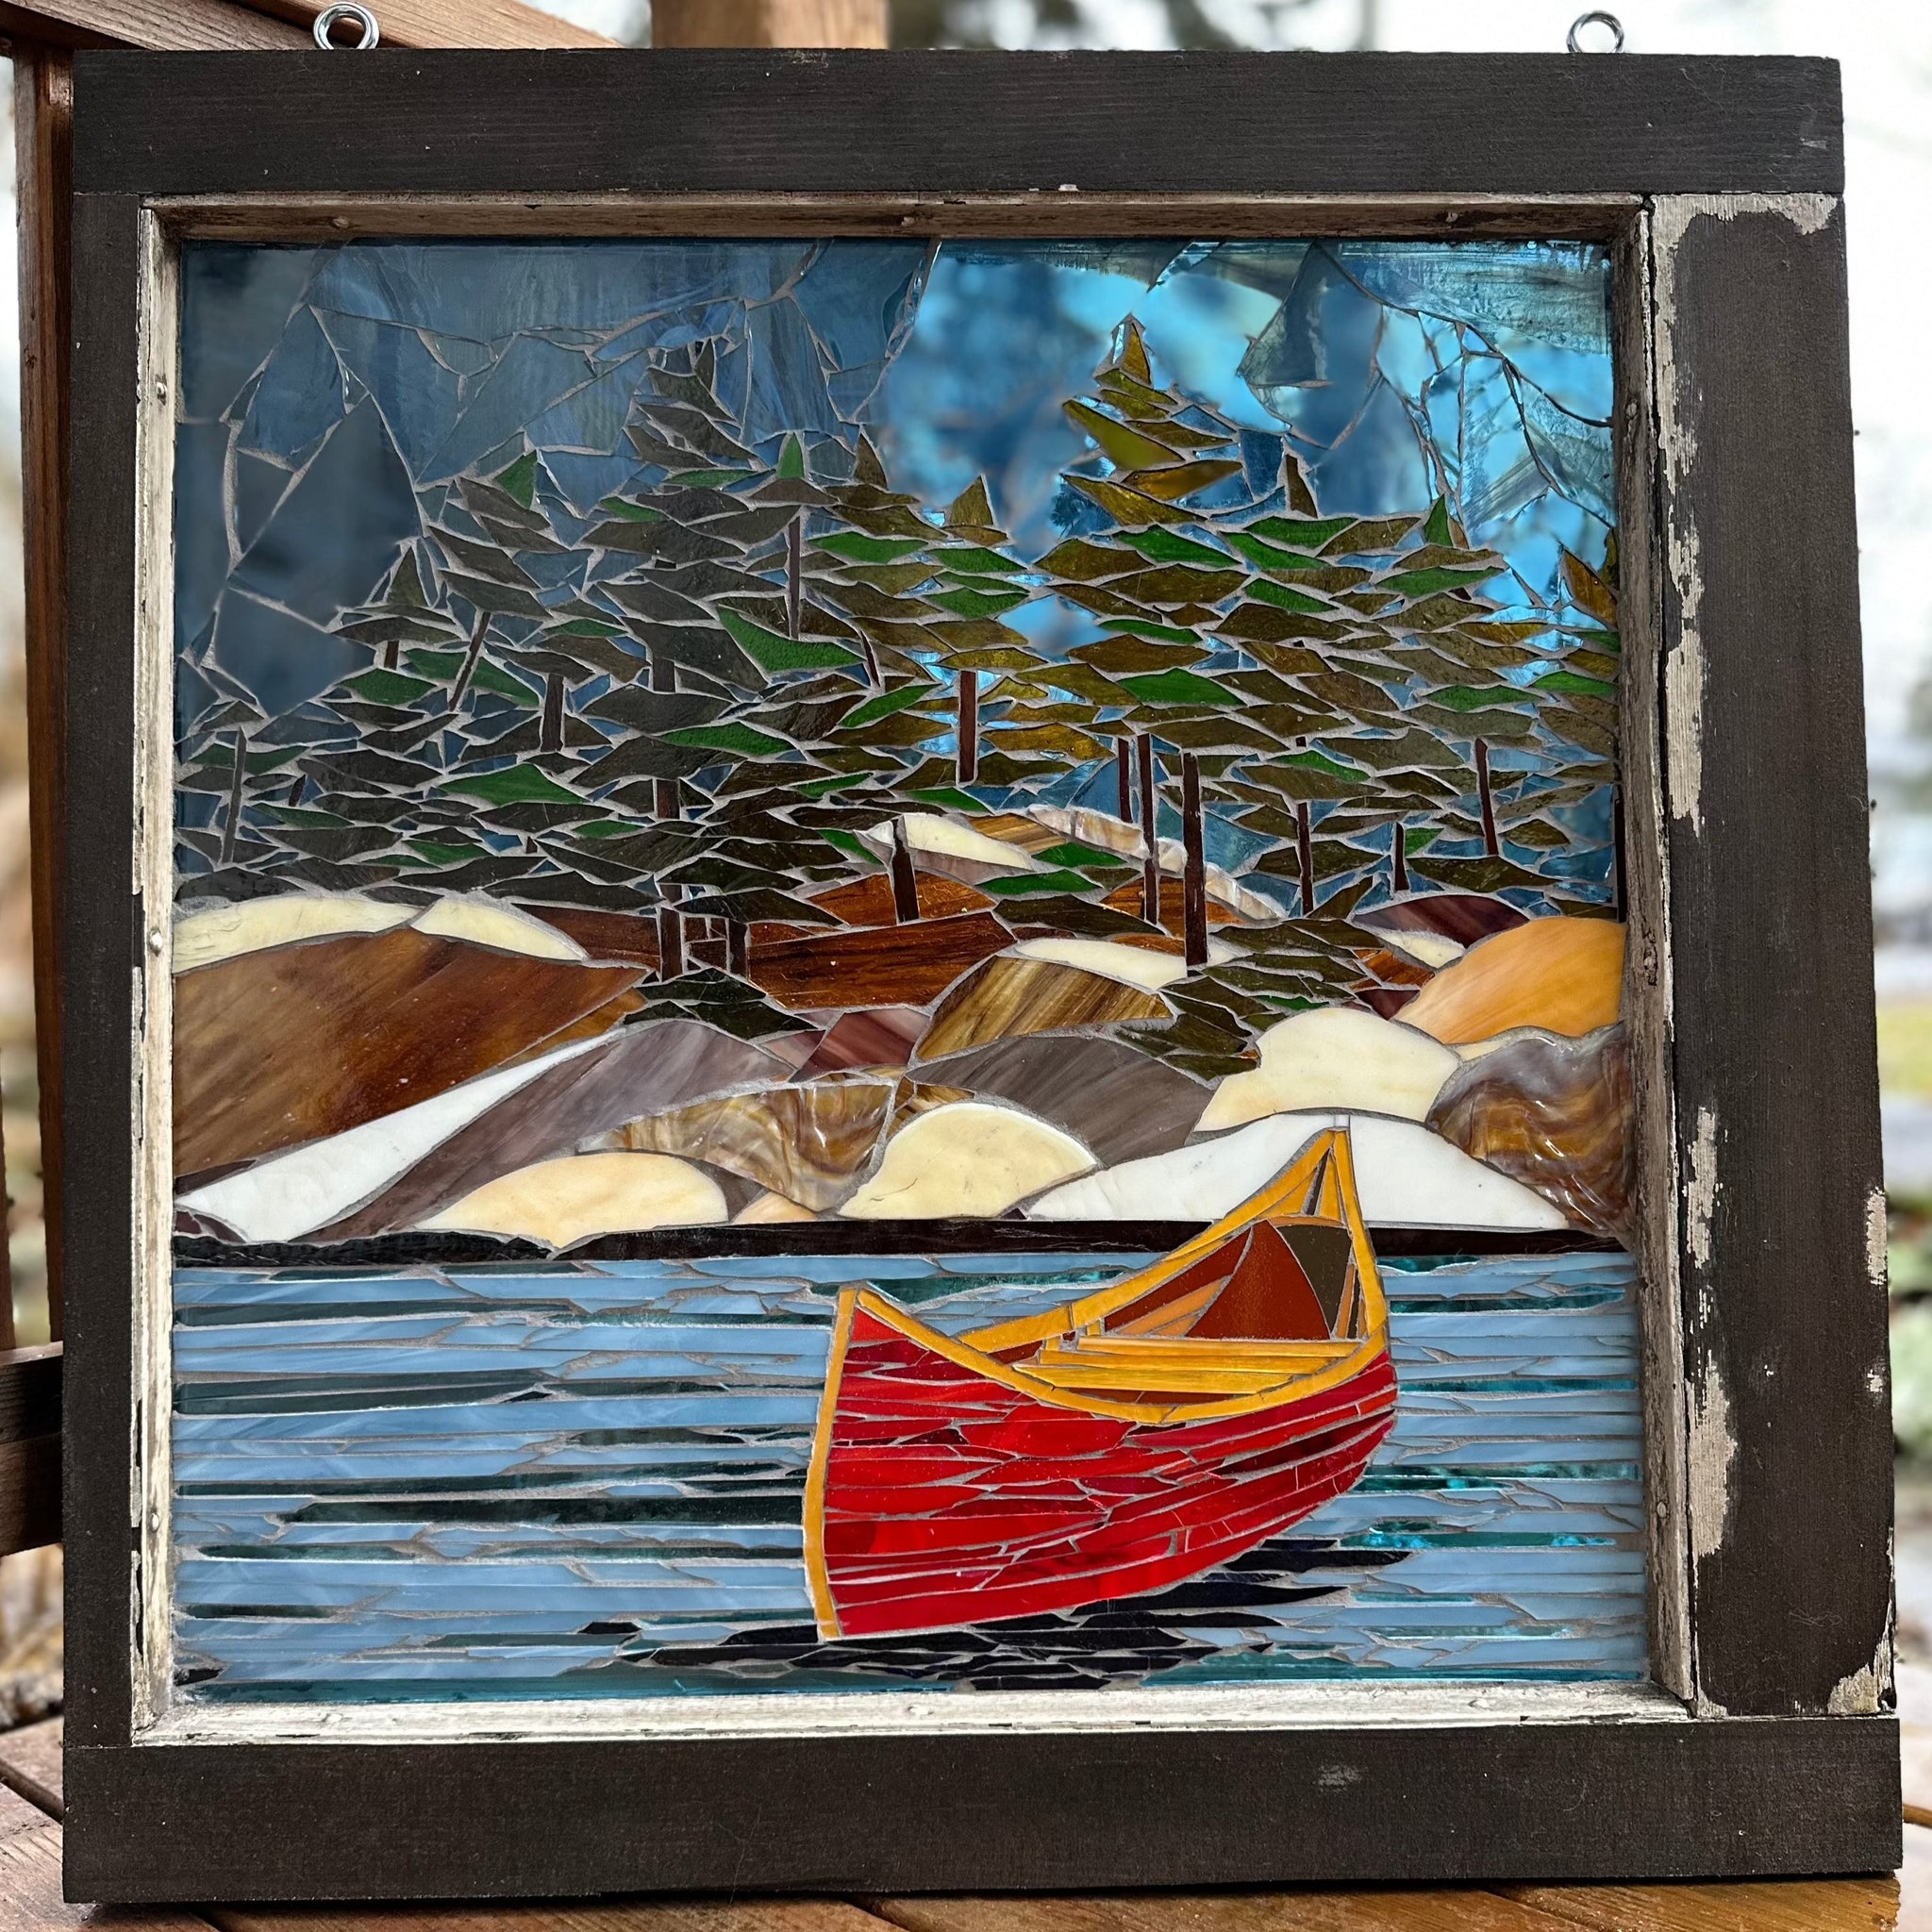 Cindy Laneville - Mosaic Artist Windows Reflections of Pine